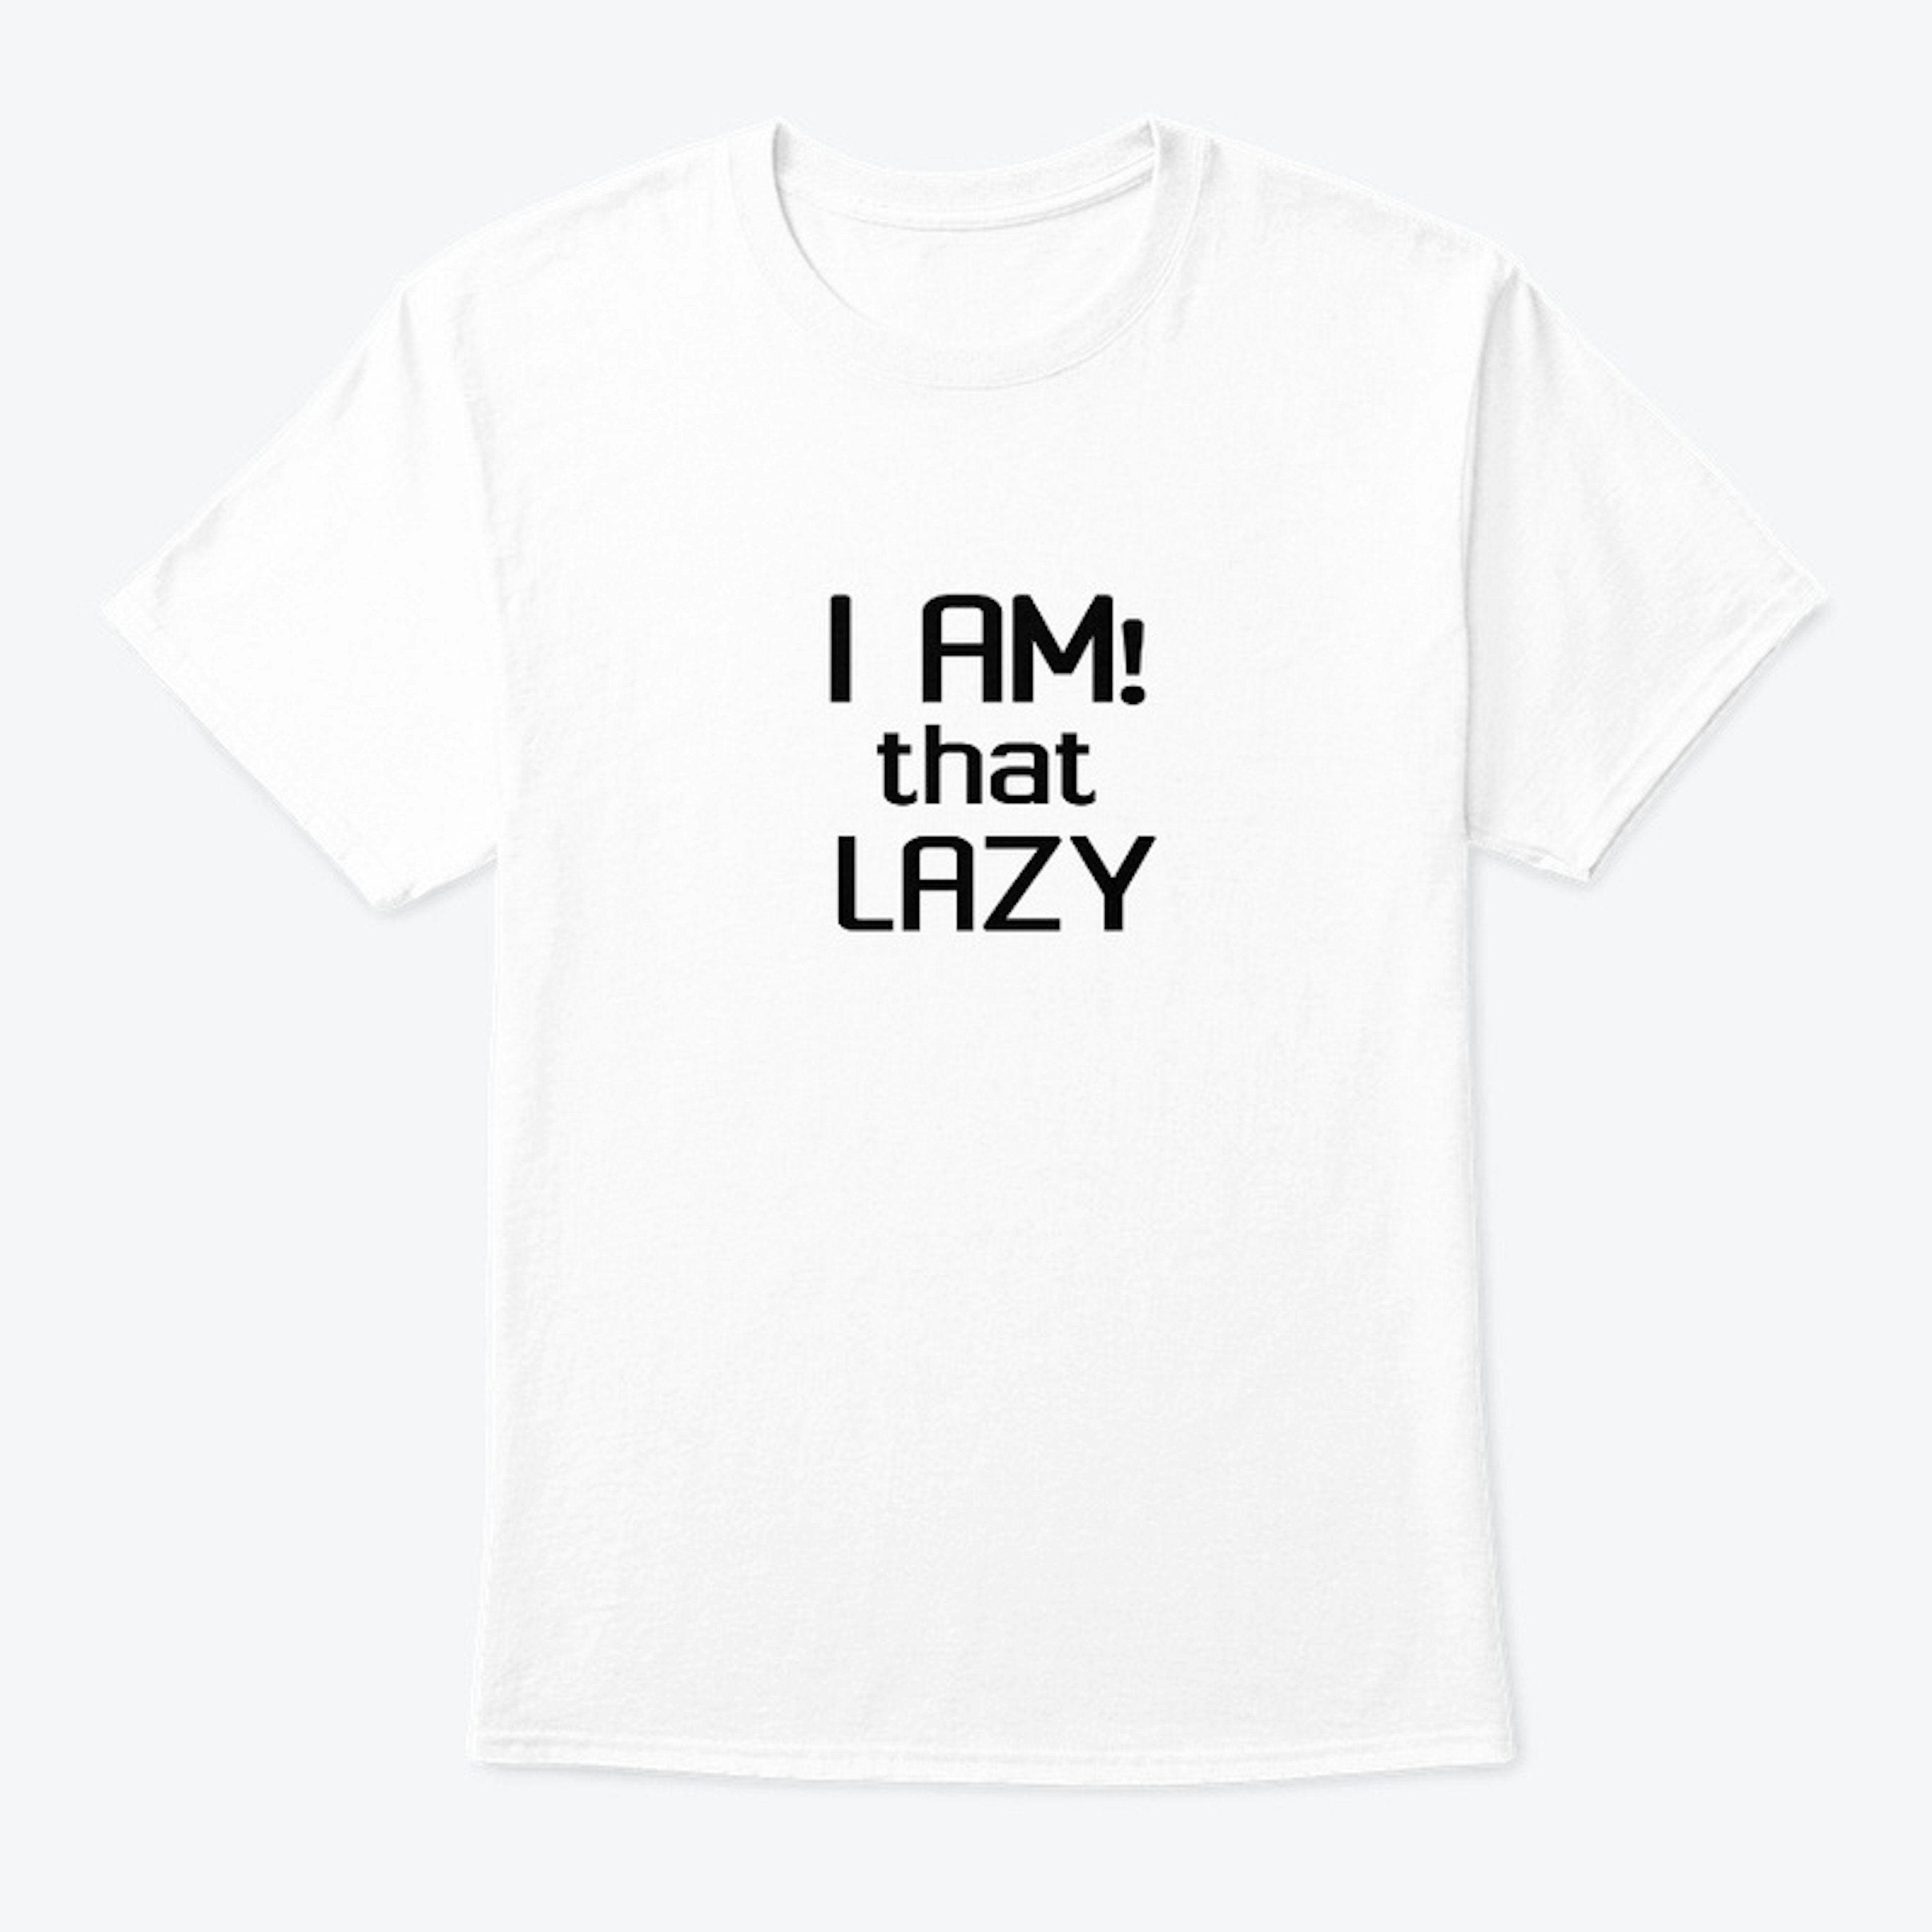 I AM! that lazy